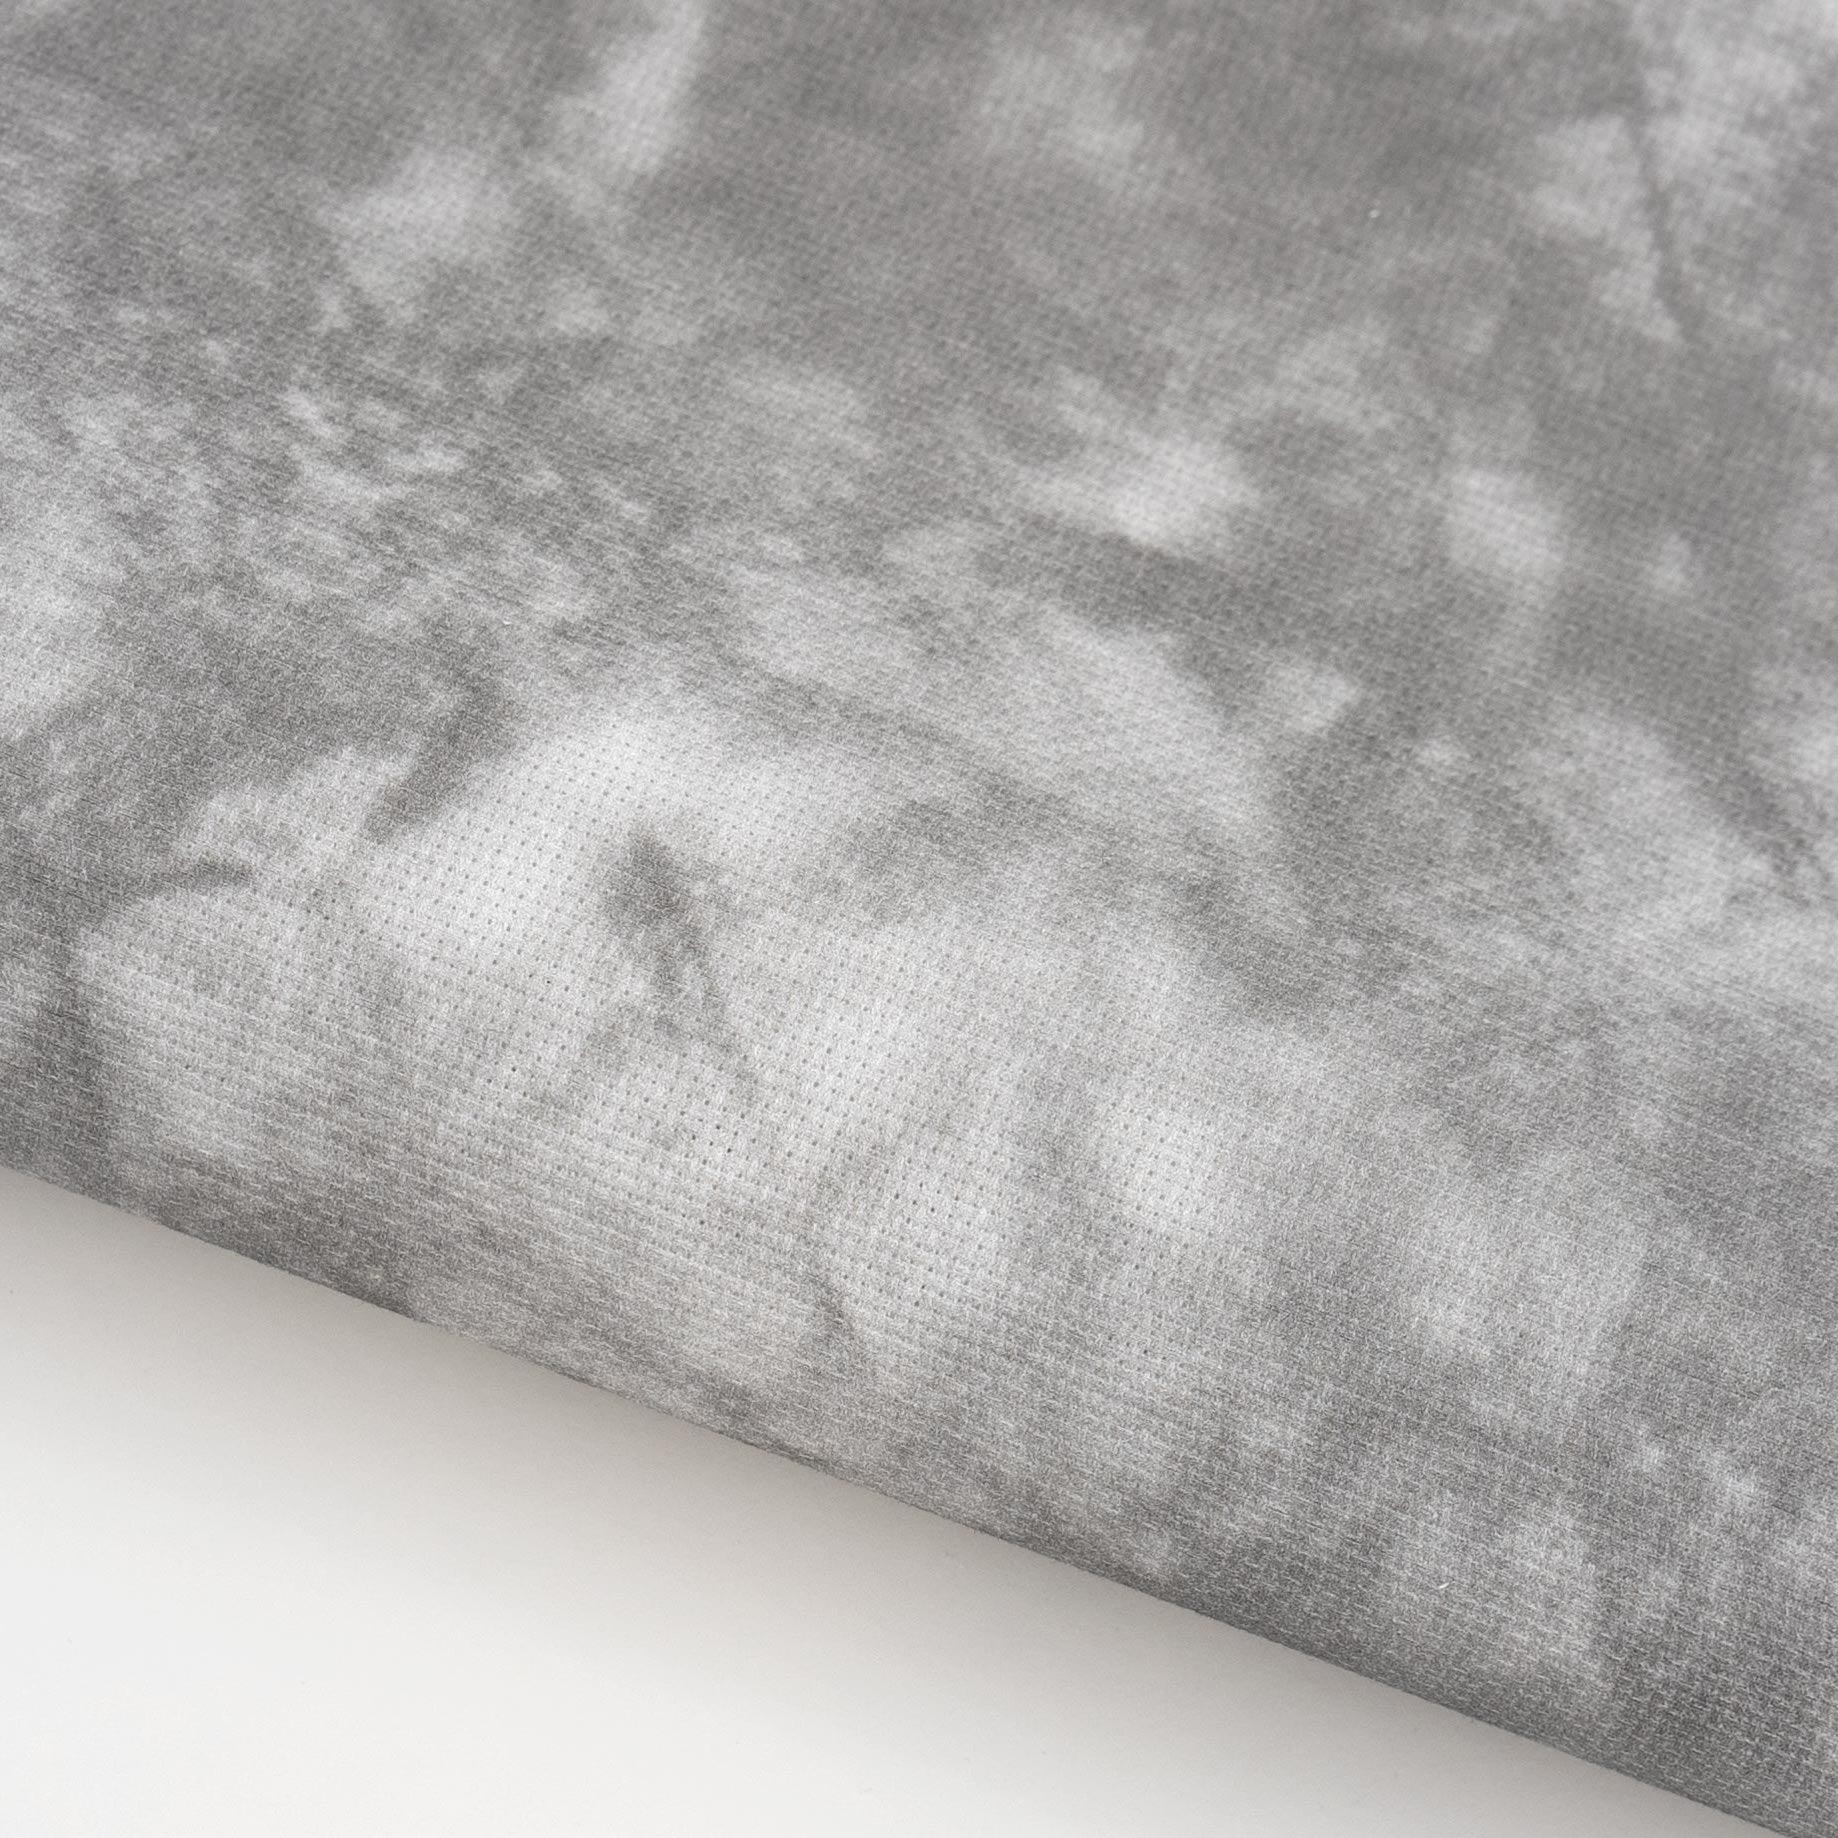 Stormy Grey - Hand Dyed Cross Stitch Fabric